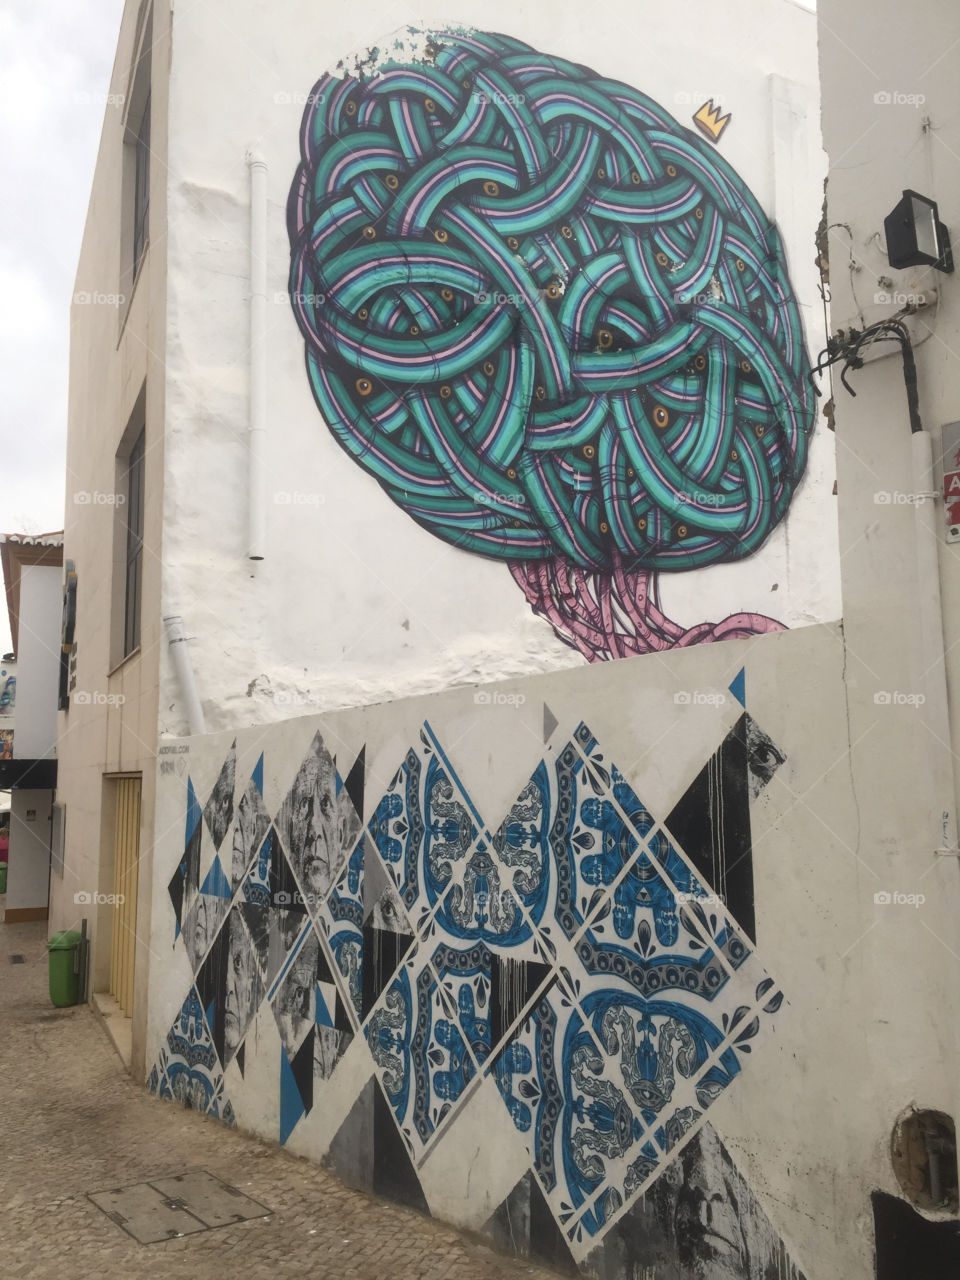 Portugal’s graffiti 